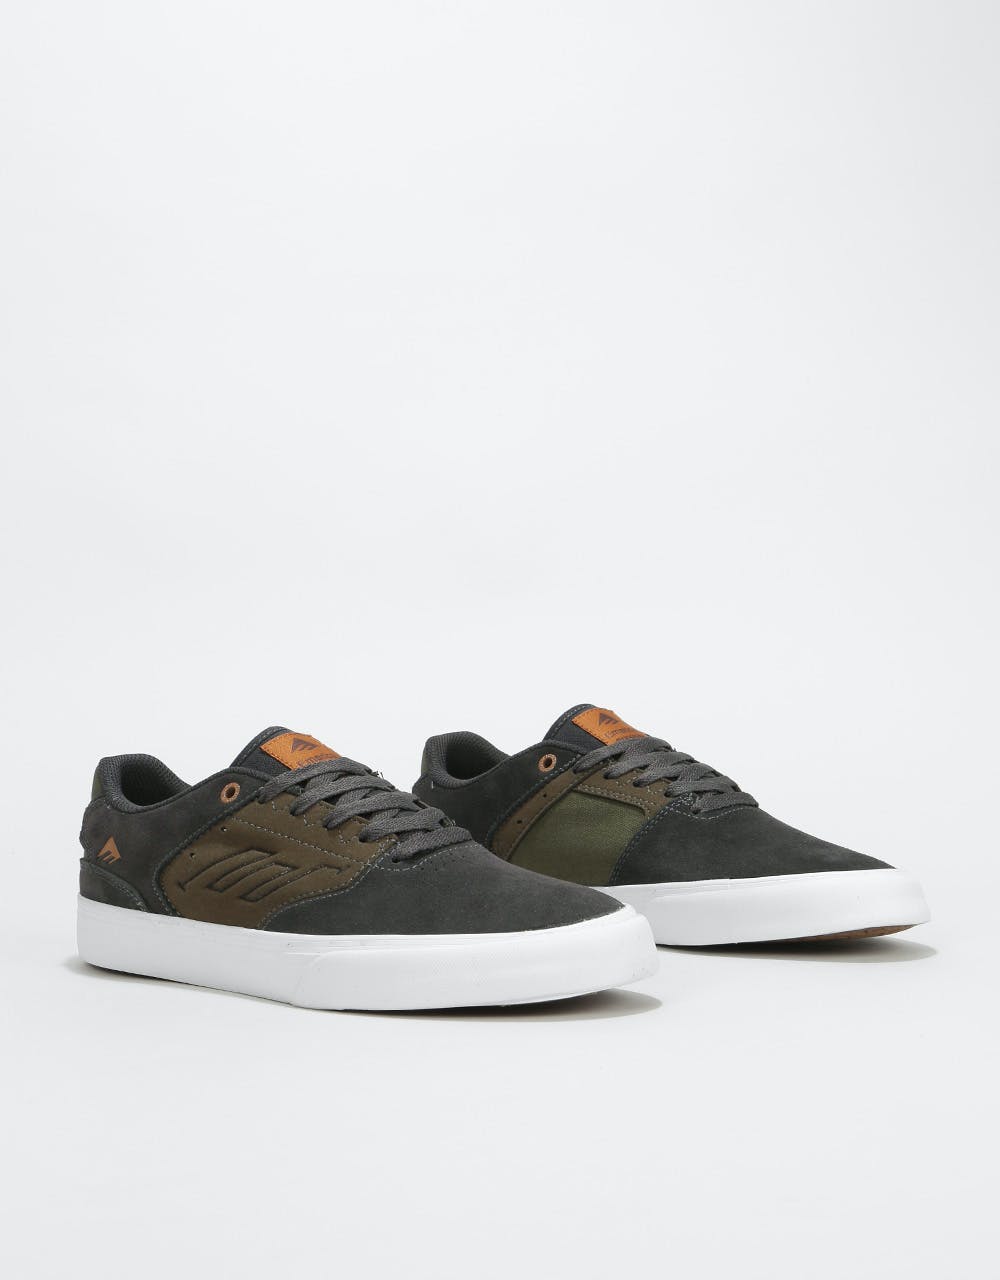 Emerica Reynolds Low Vulc Skate Shoes - Grey/Green